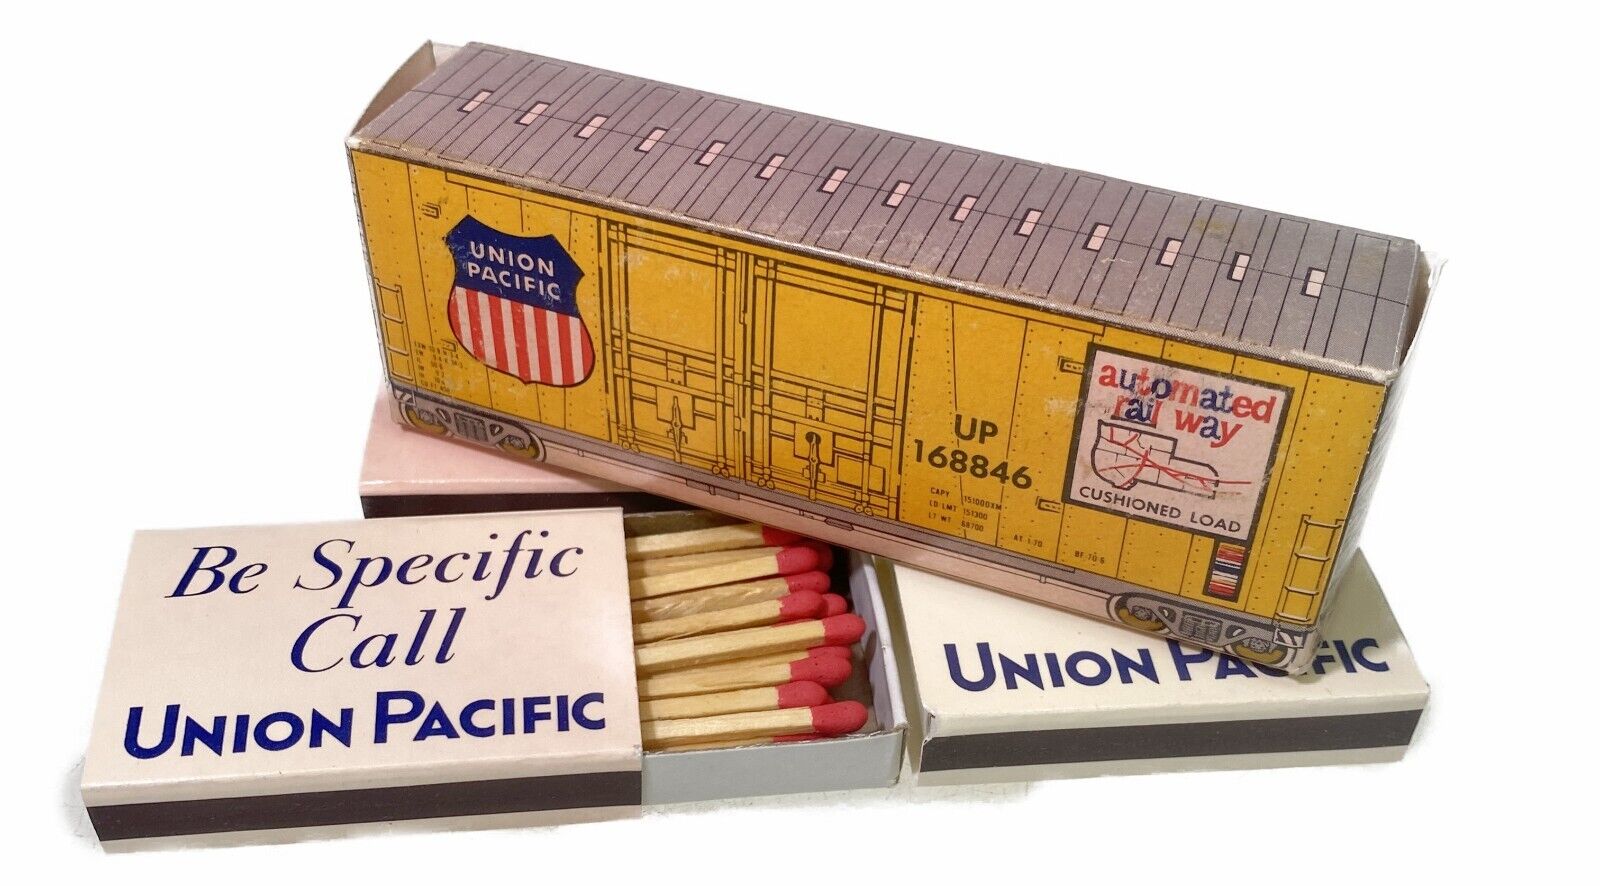 Union Pacific UP Train Car Rail Way Four Match Boxes Unstruck Matches Railroad